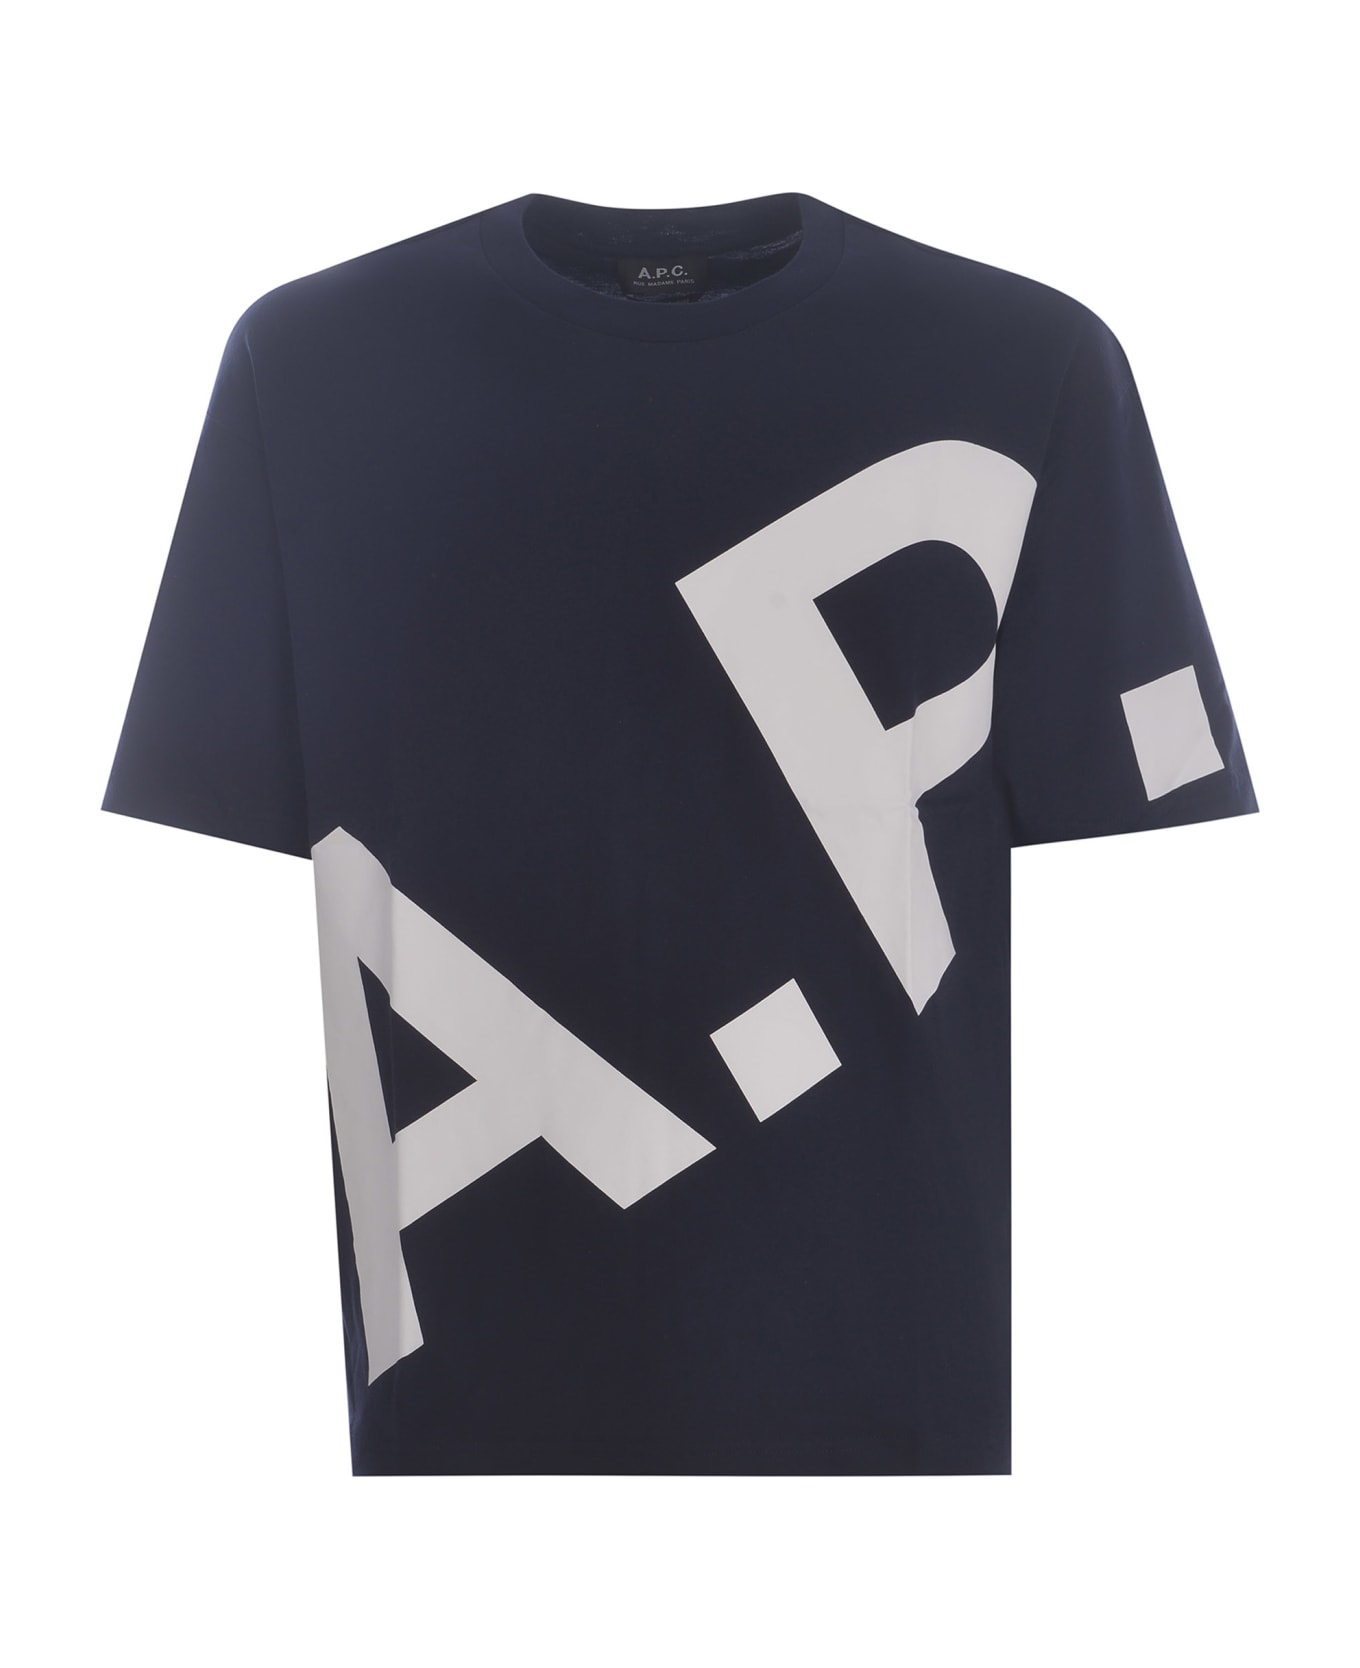 A.P.C. Lisandre T-shirt - DARK NAVY